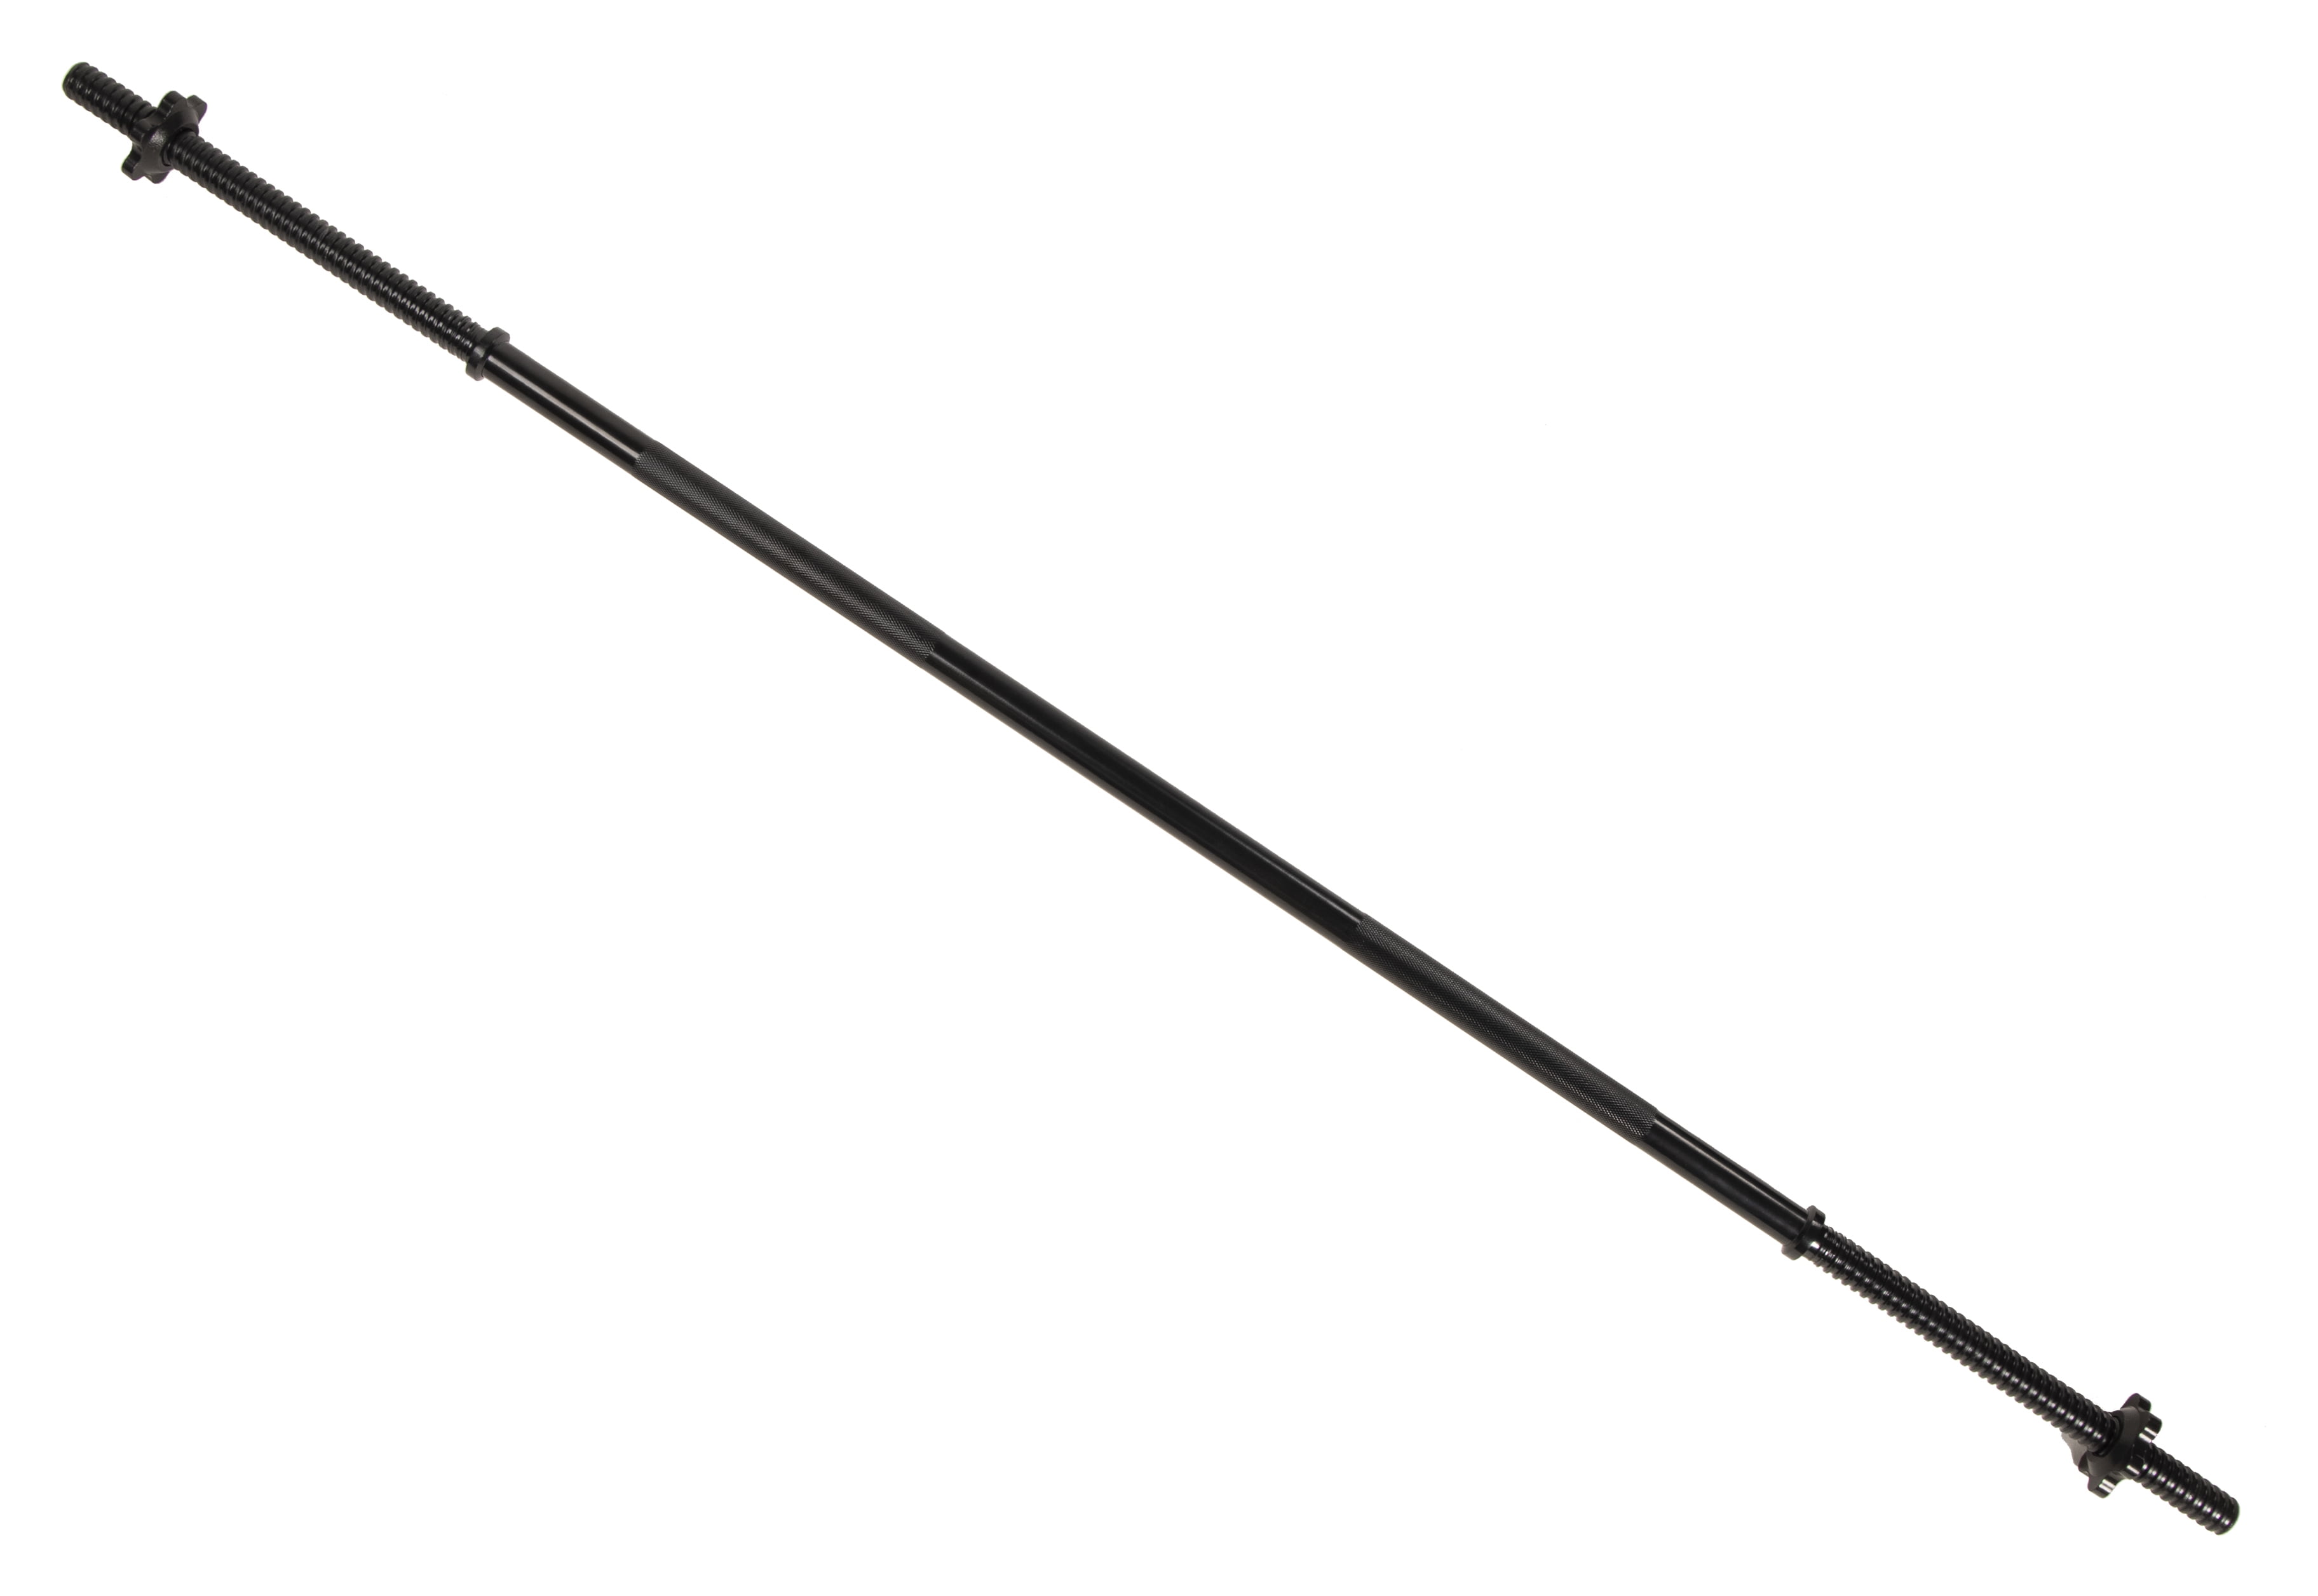 BalanceFrom 1-Inch Diameter Threaded Chrome Barbell with Lock Collars, 60- Inch (250lb Capacity) - Walmart.com